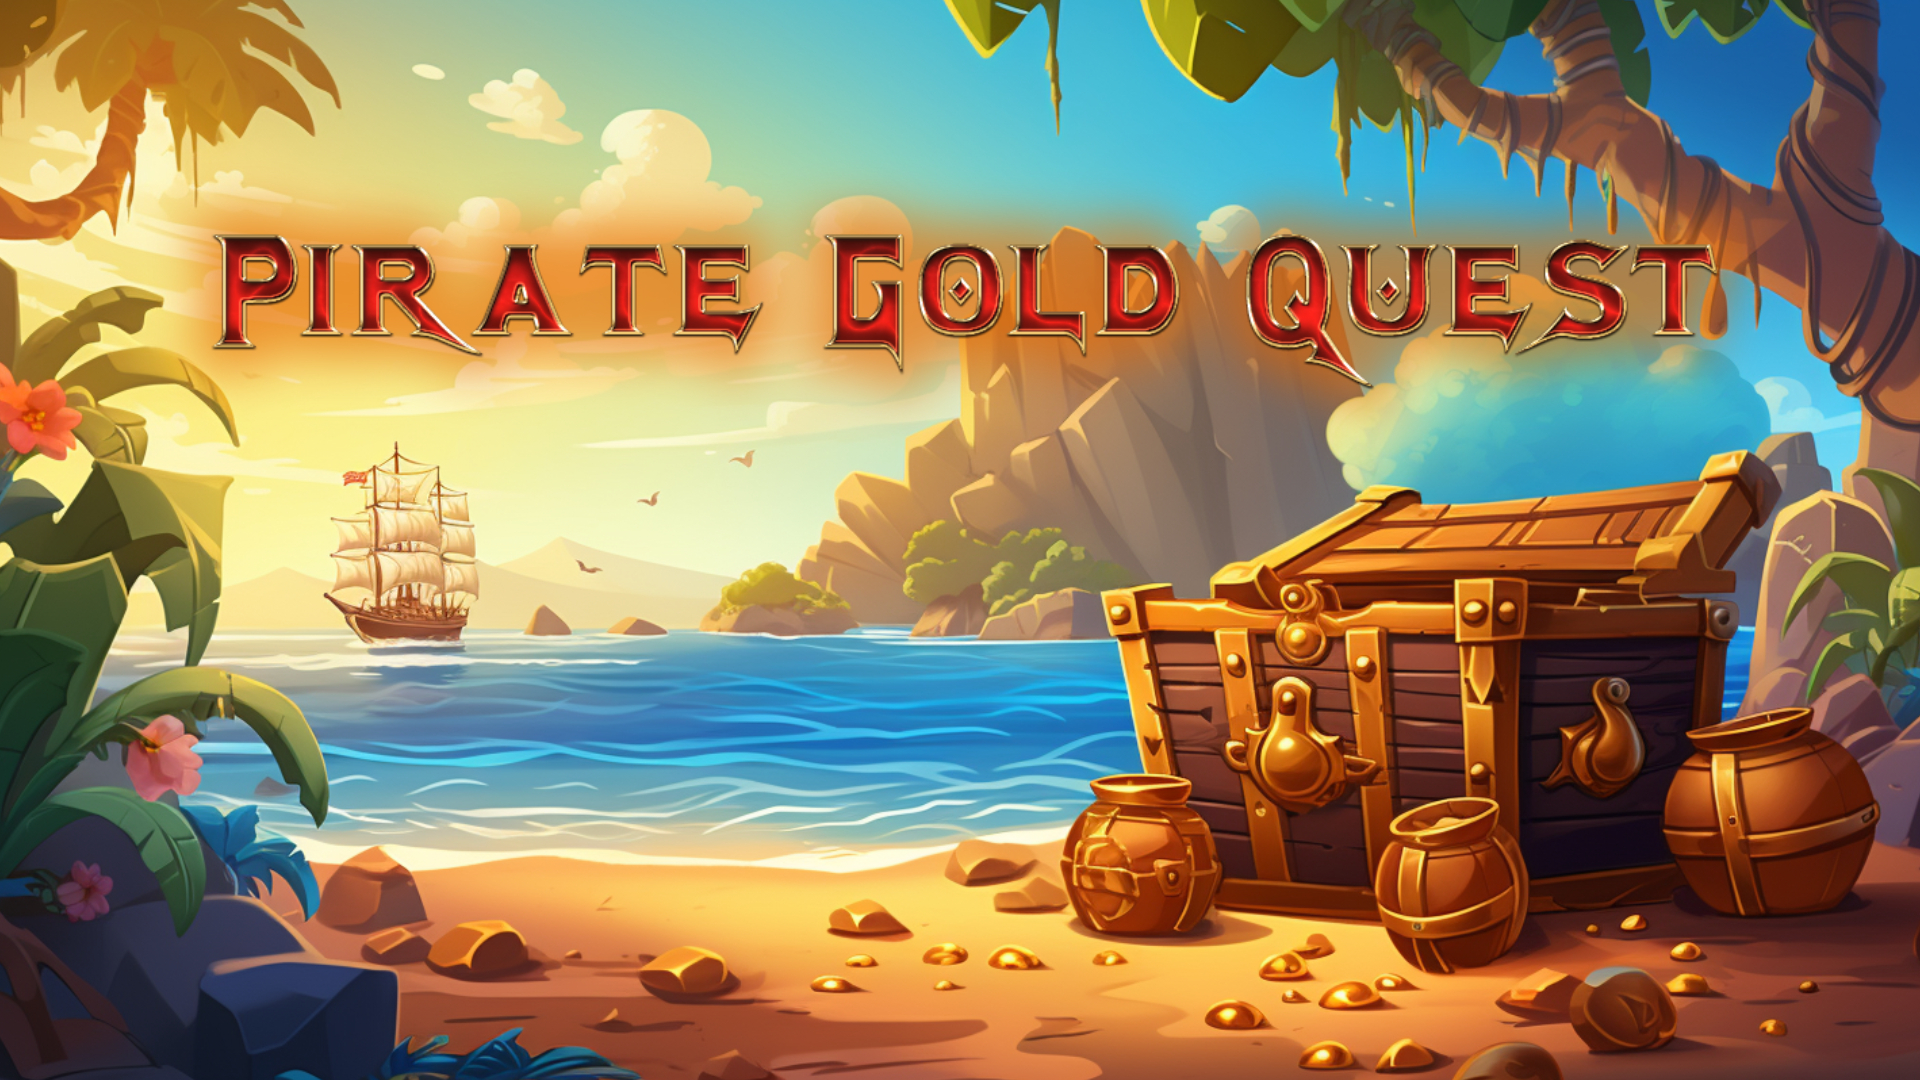 Pirates Golden Quest